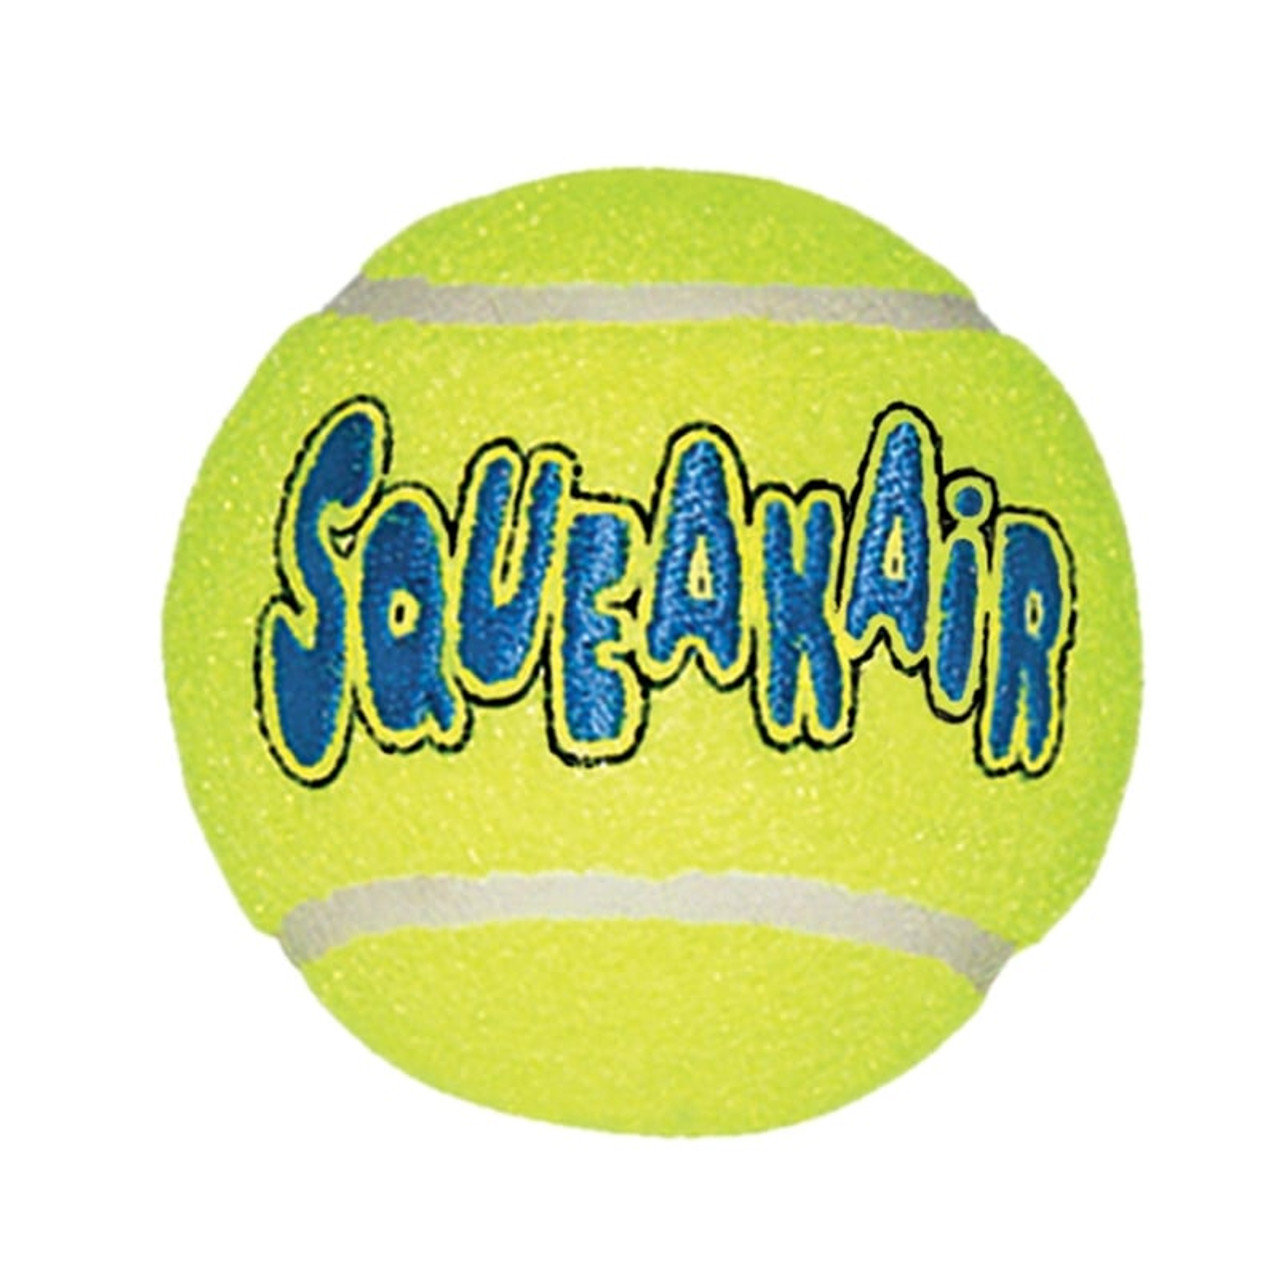 KONG Air Dog Large Squeaker Tennis Ball